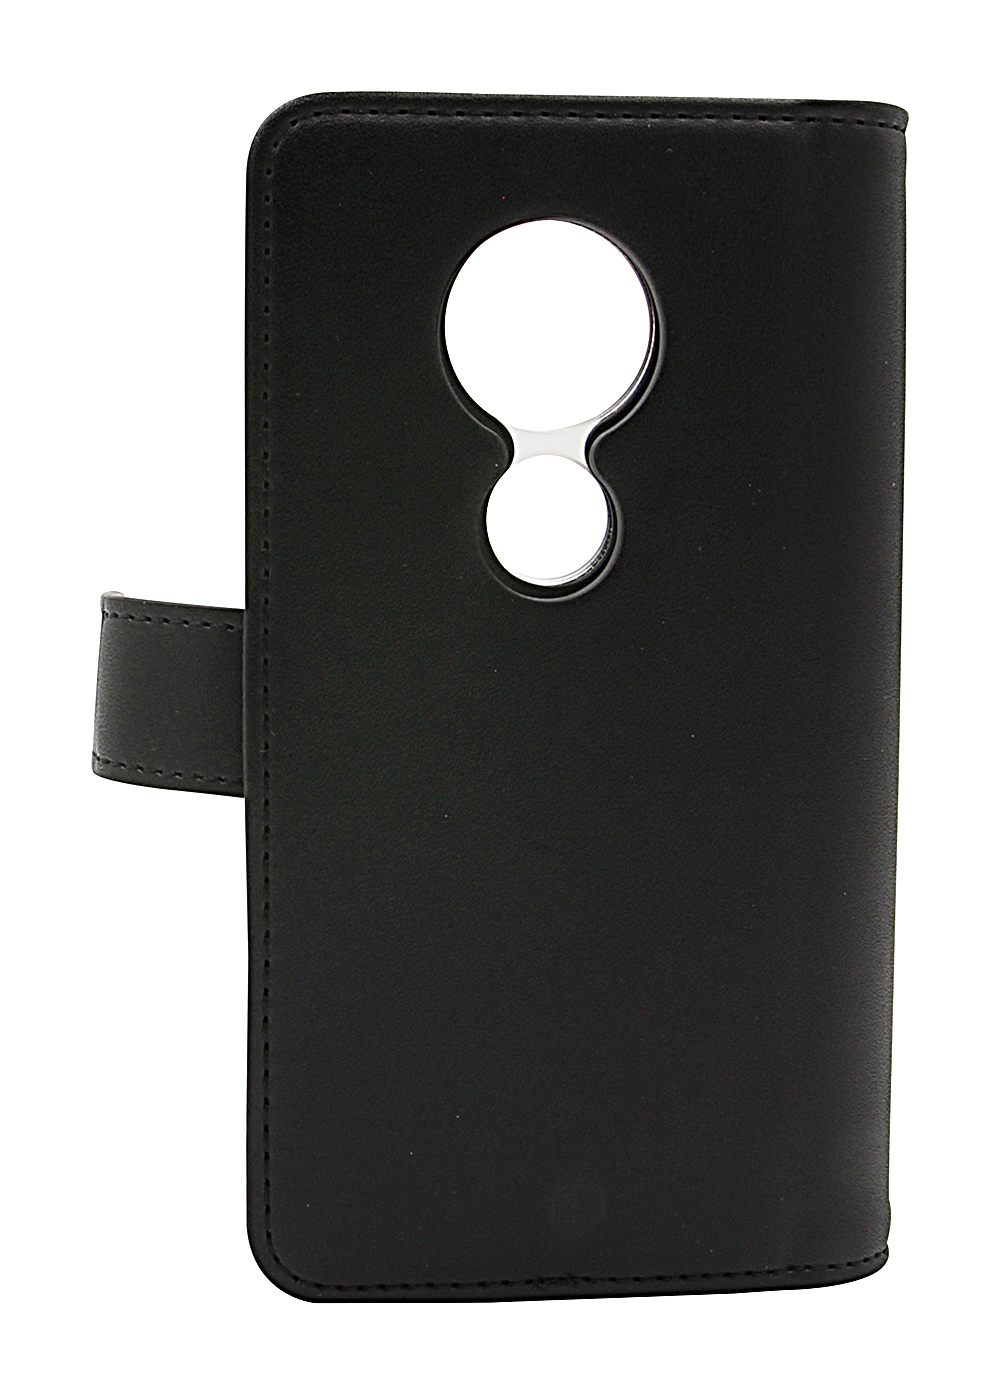 Skimblocker Magnet Wallet Motorola Moto E6 Play